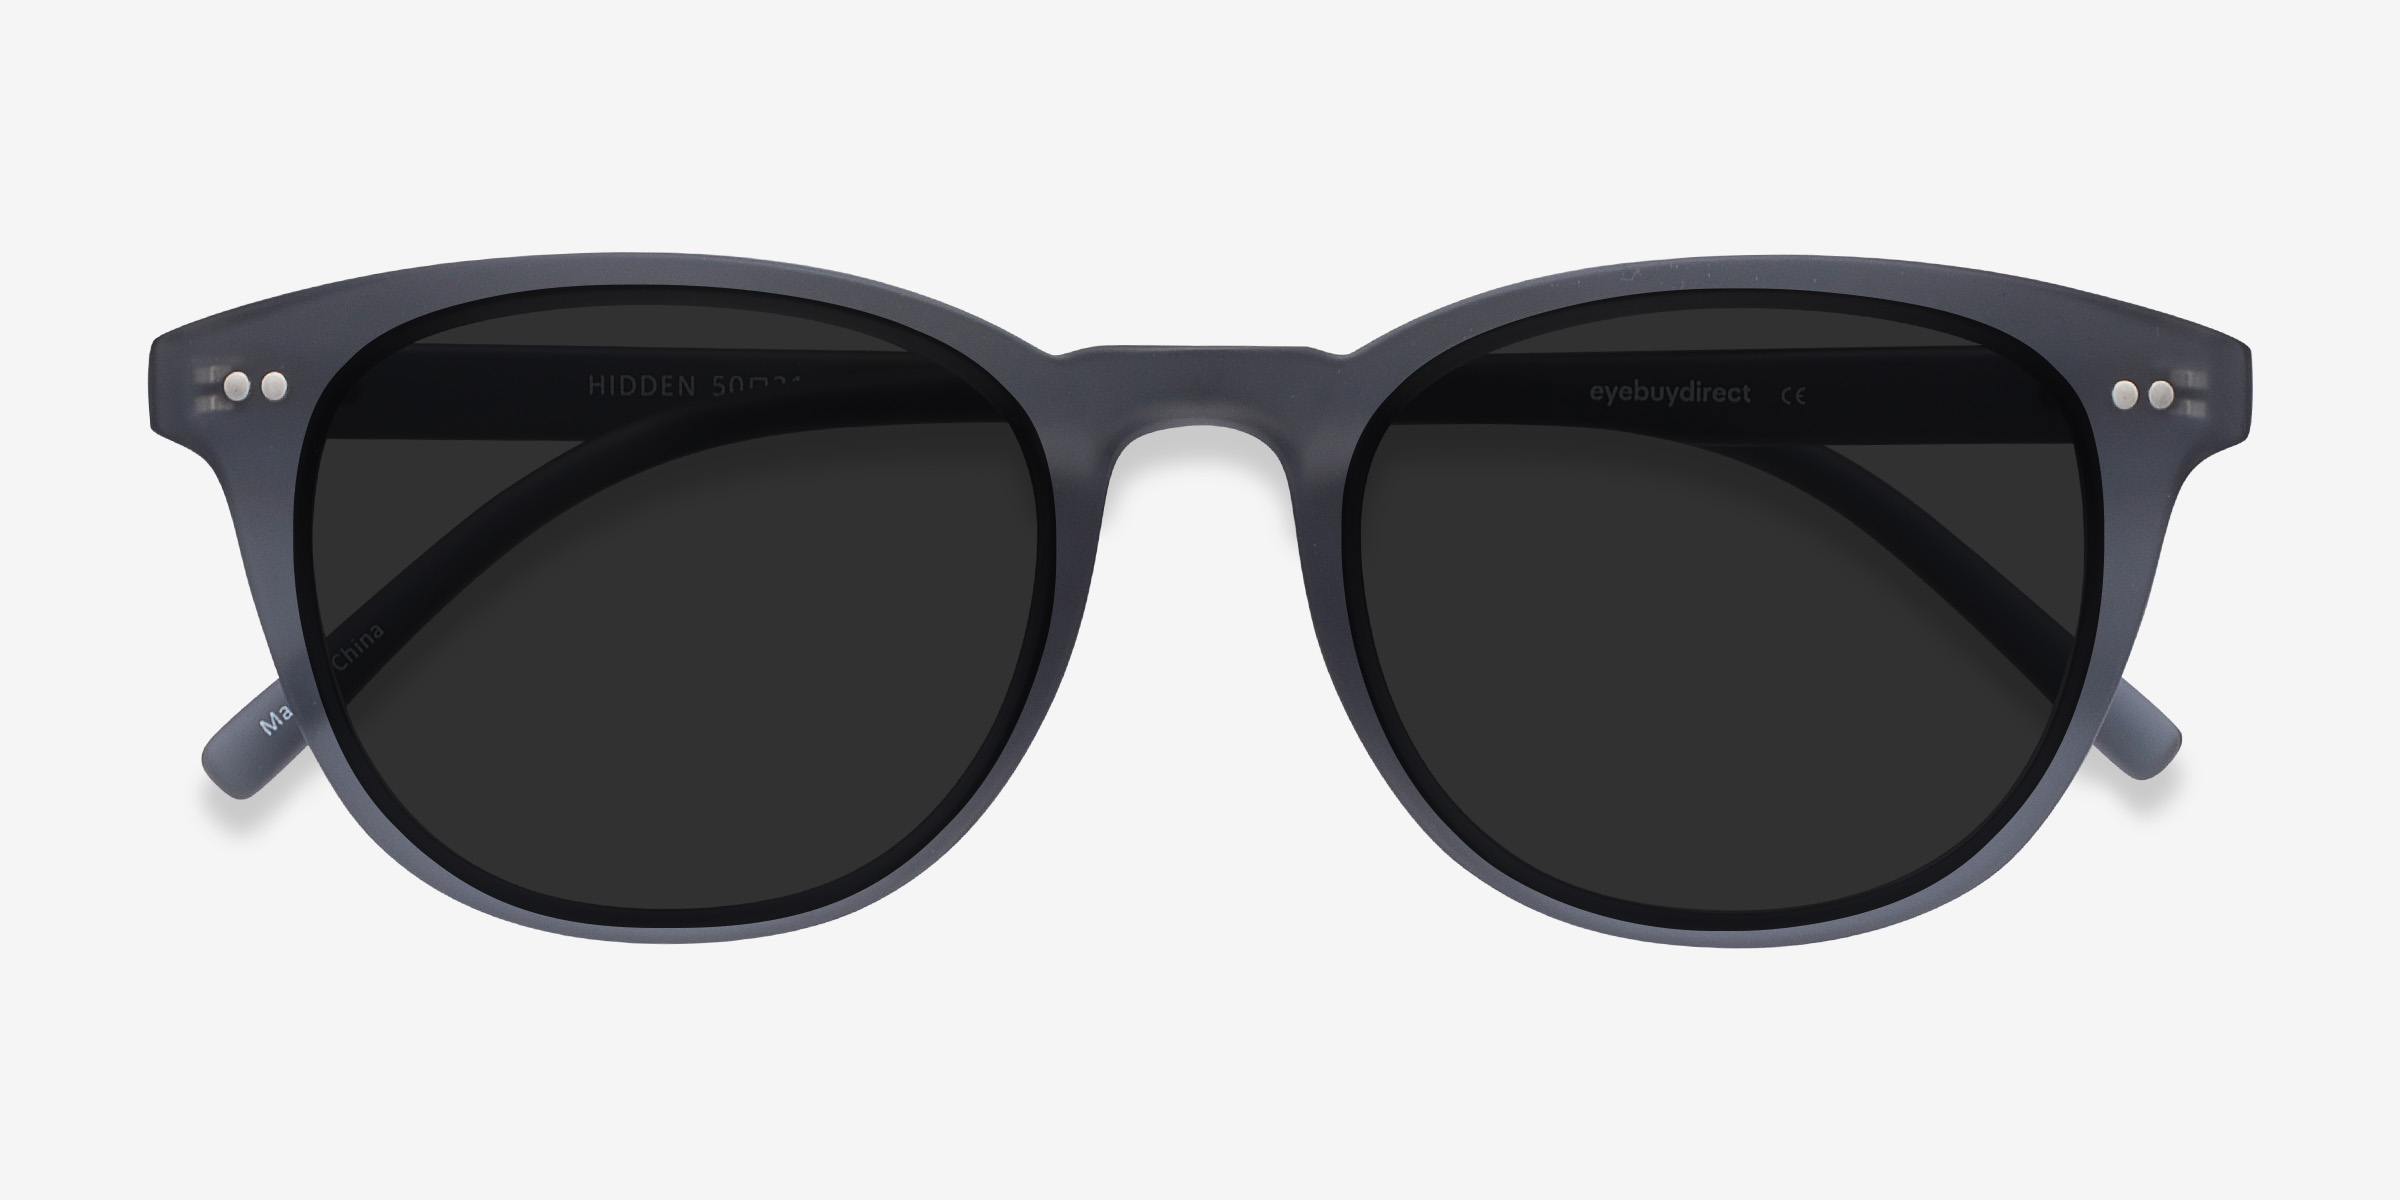 Hidden Oval Gray Frame Prescription Sunglasses Eyebuydirect 